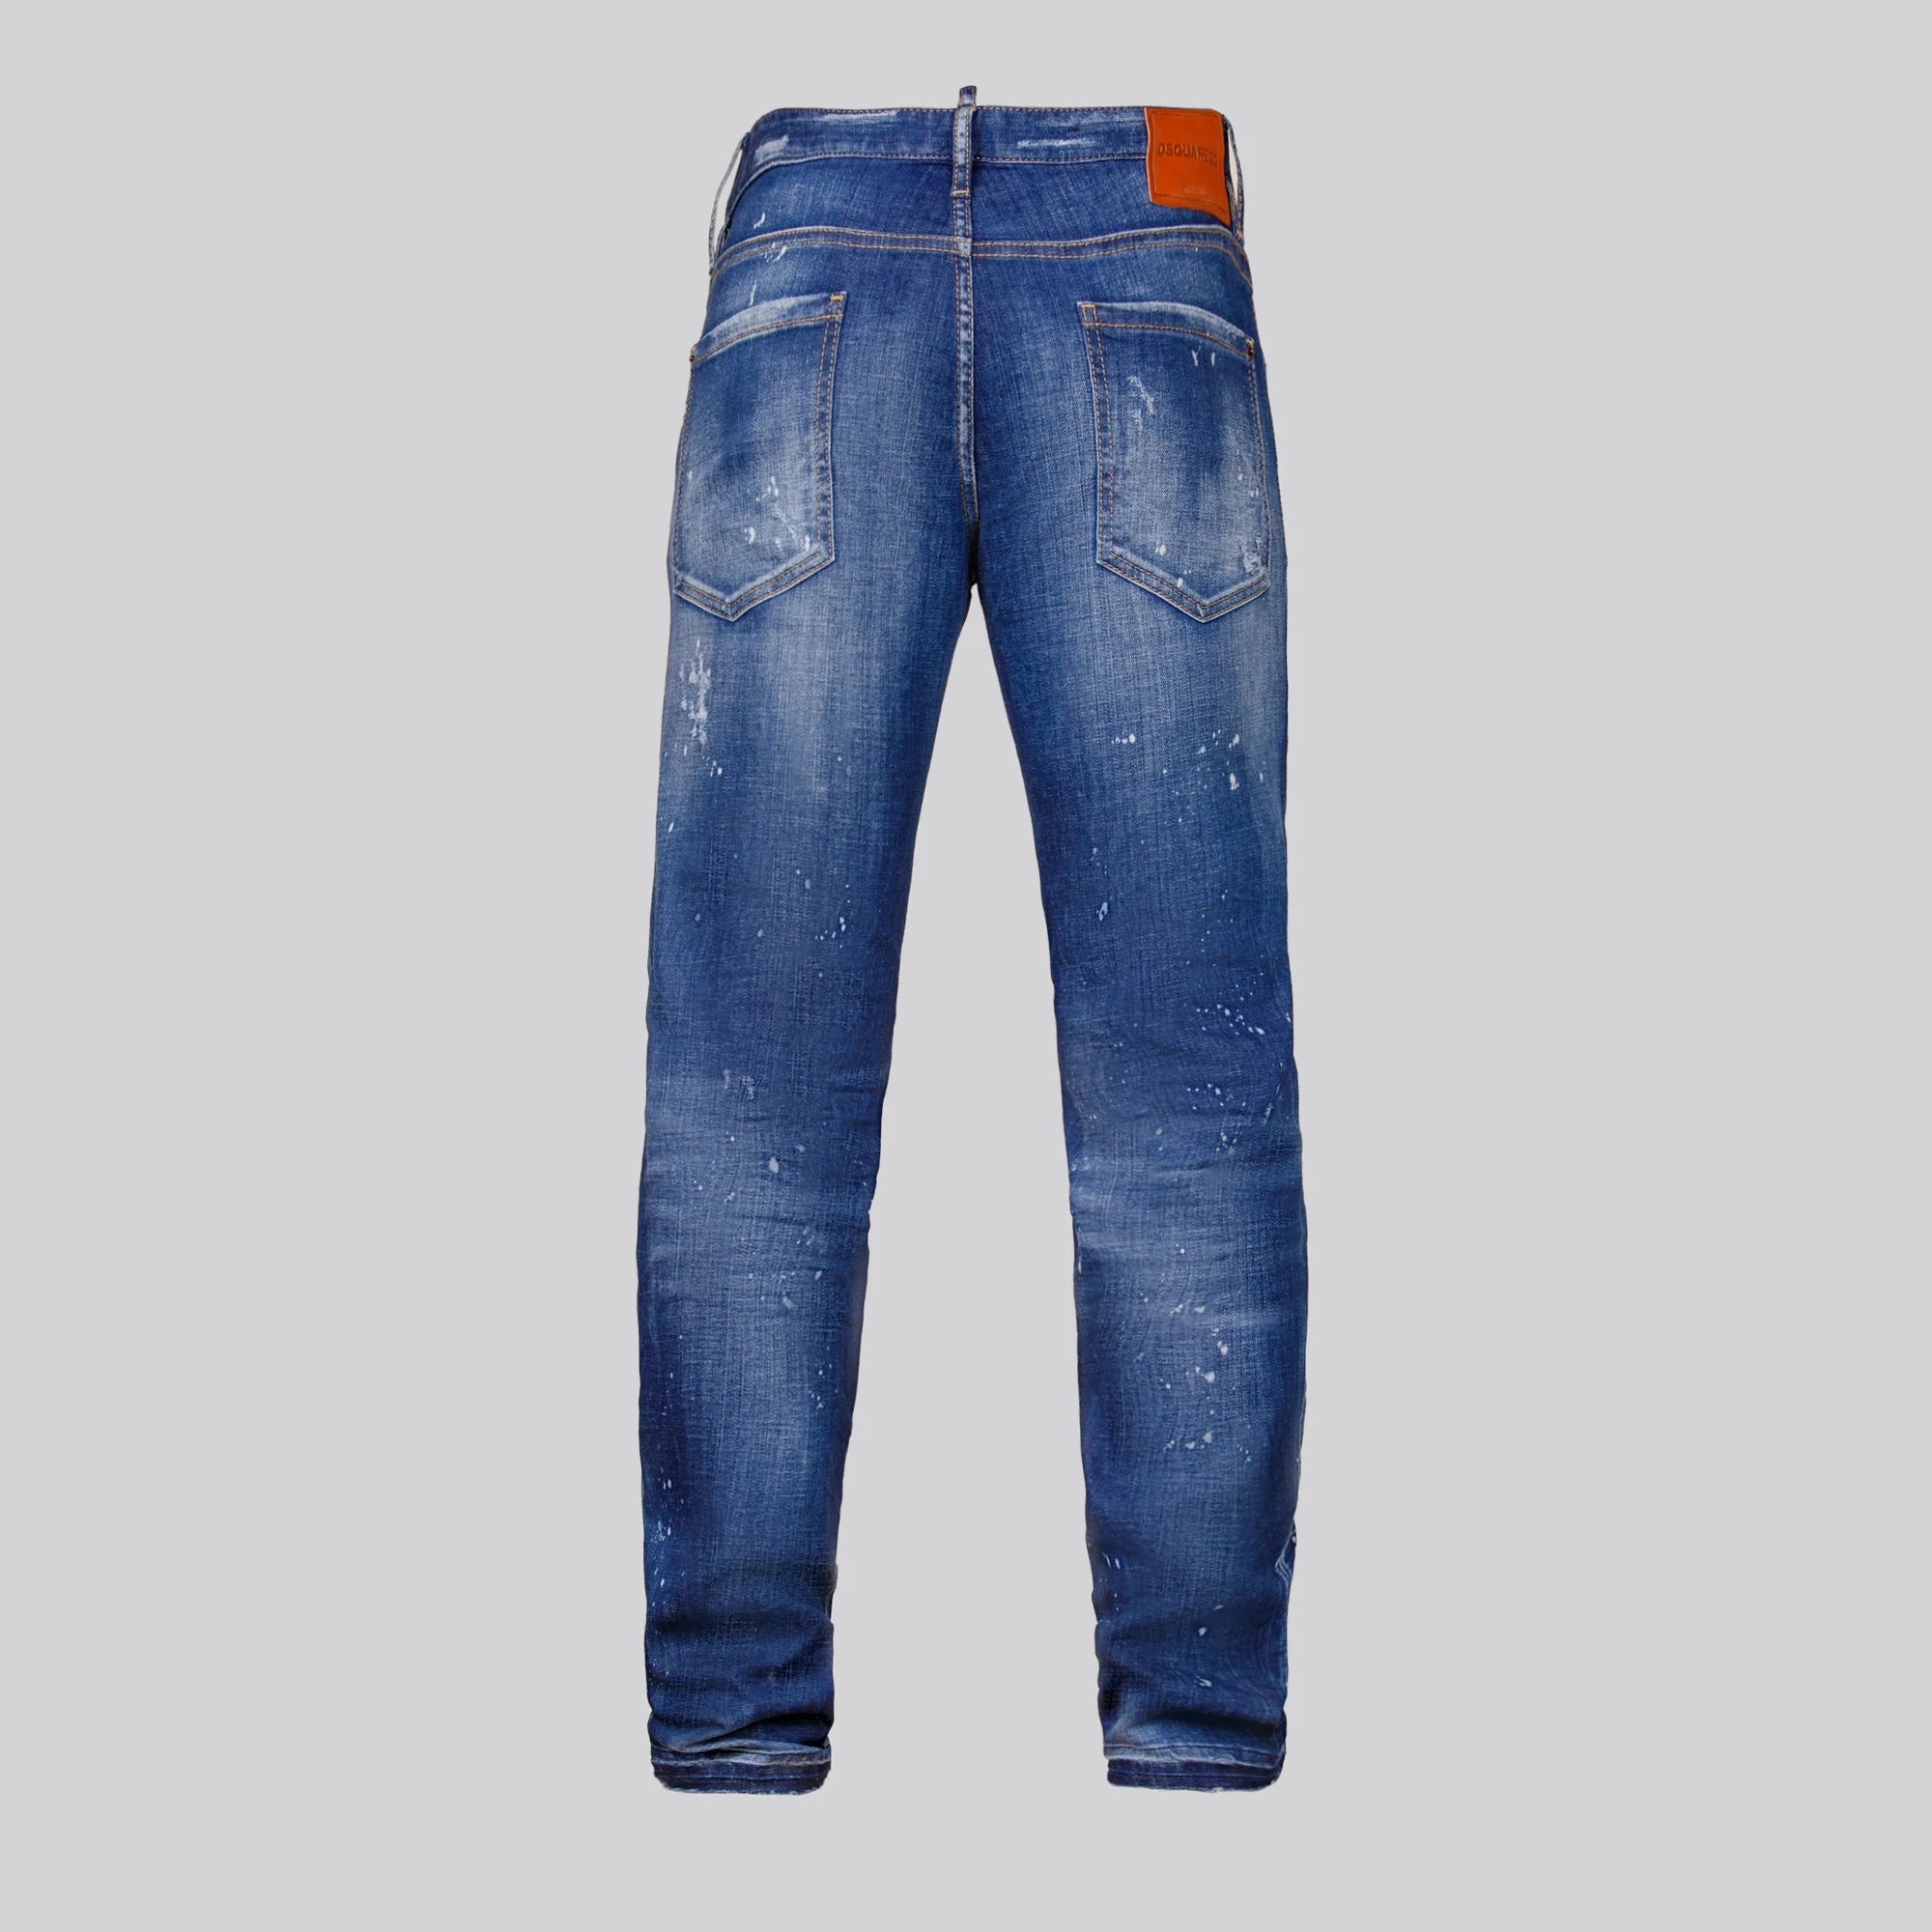 Jeans Denim Dsquared2 pantalones ajustados